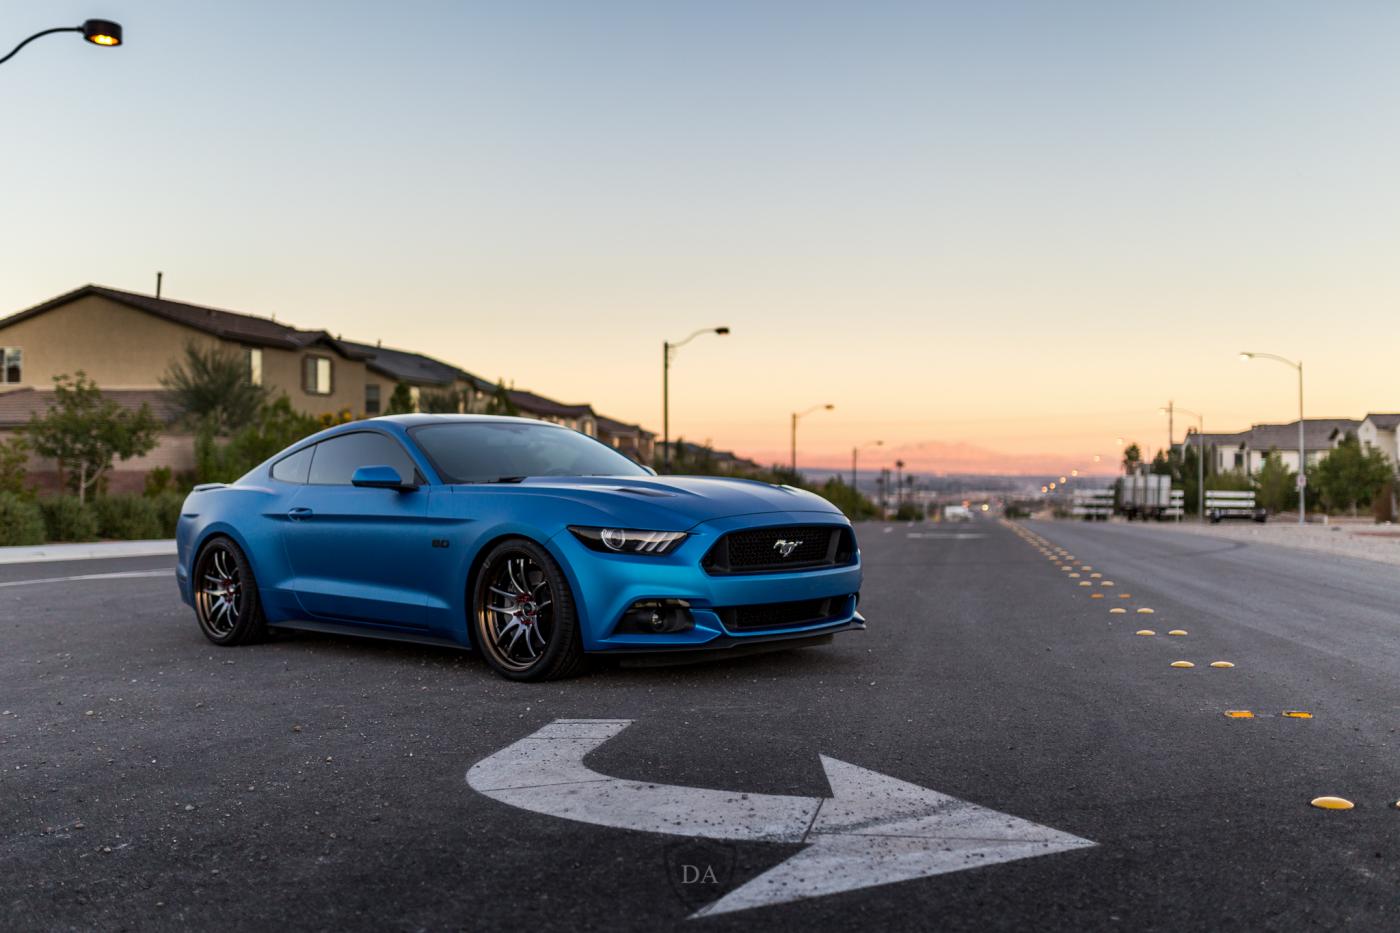 Mustang-1.jpg